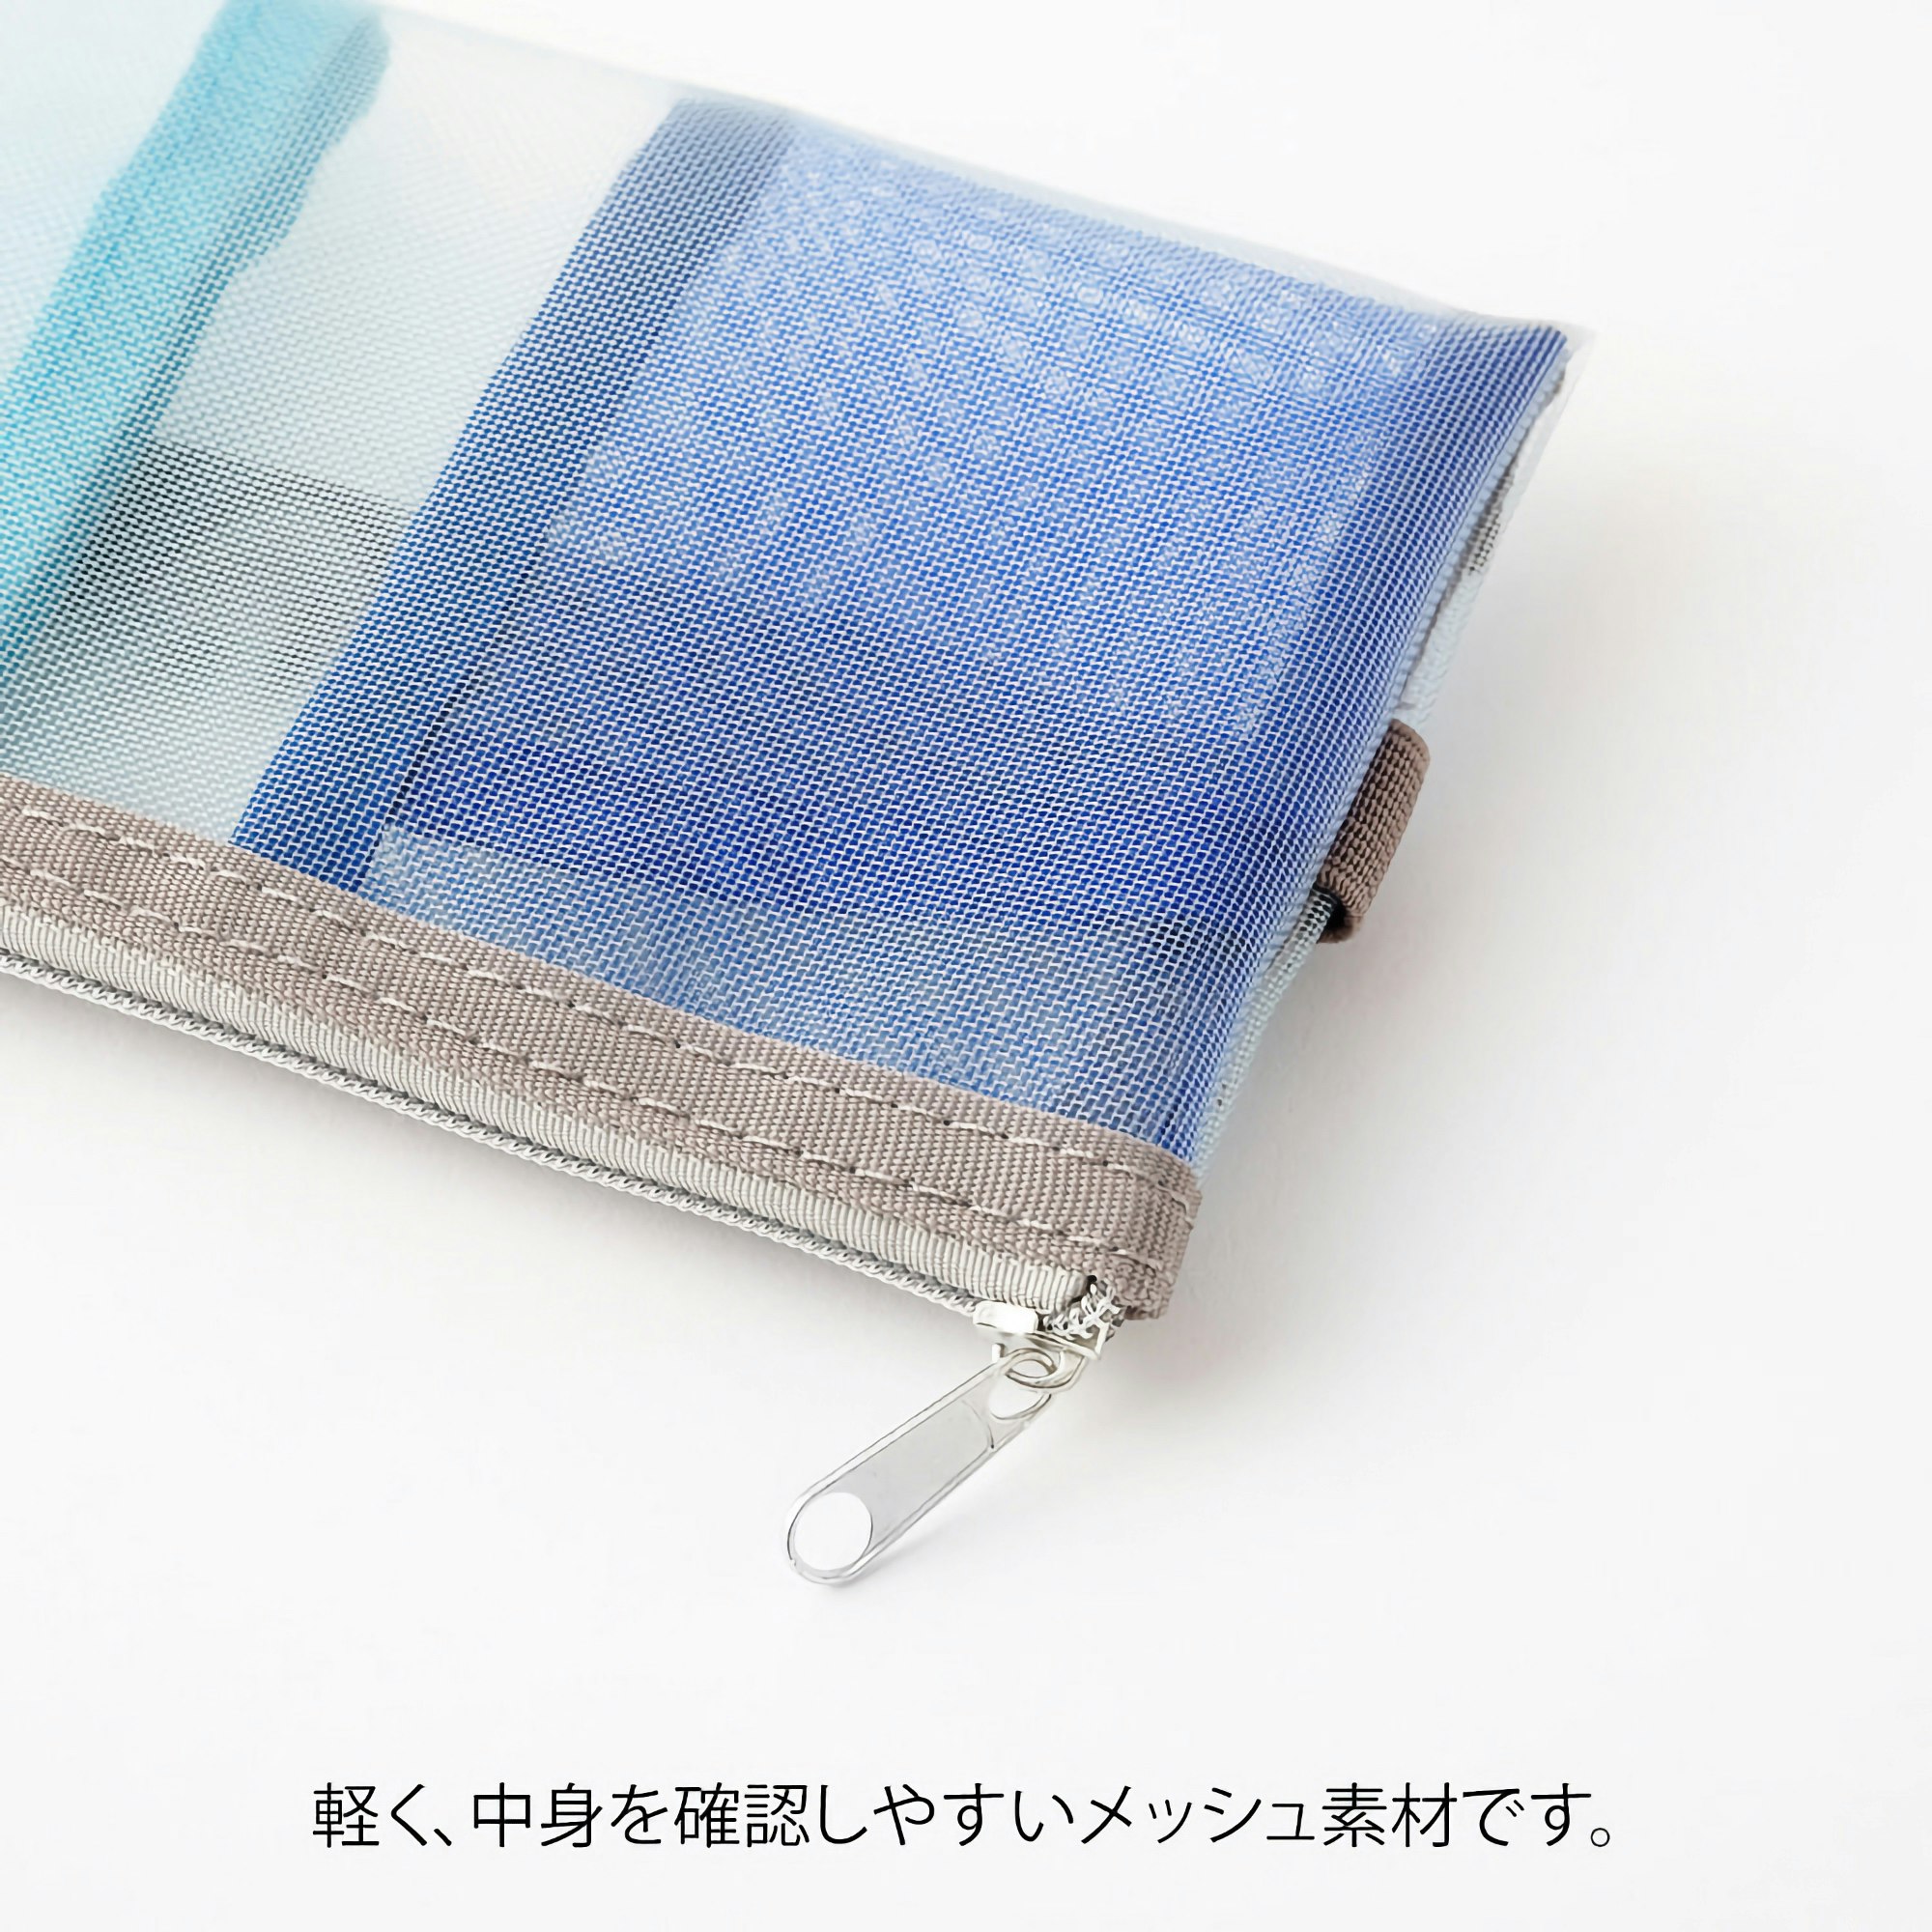 Midori Book Band Pen Case (B6–A5) Mesh Light Blue